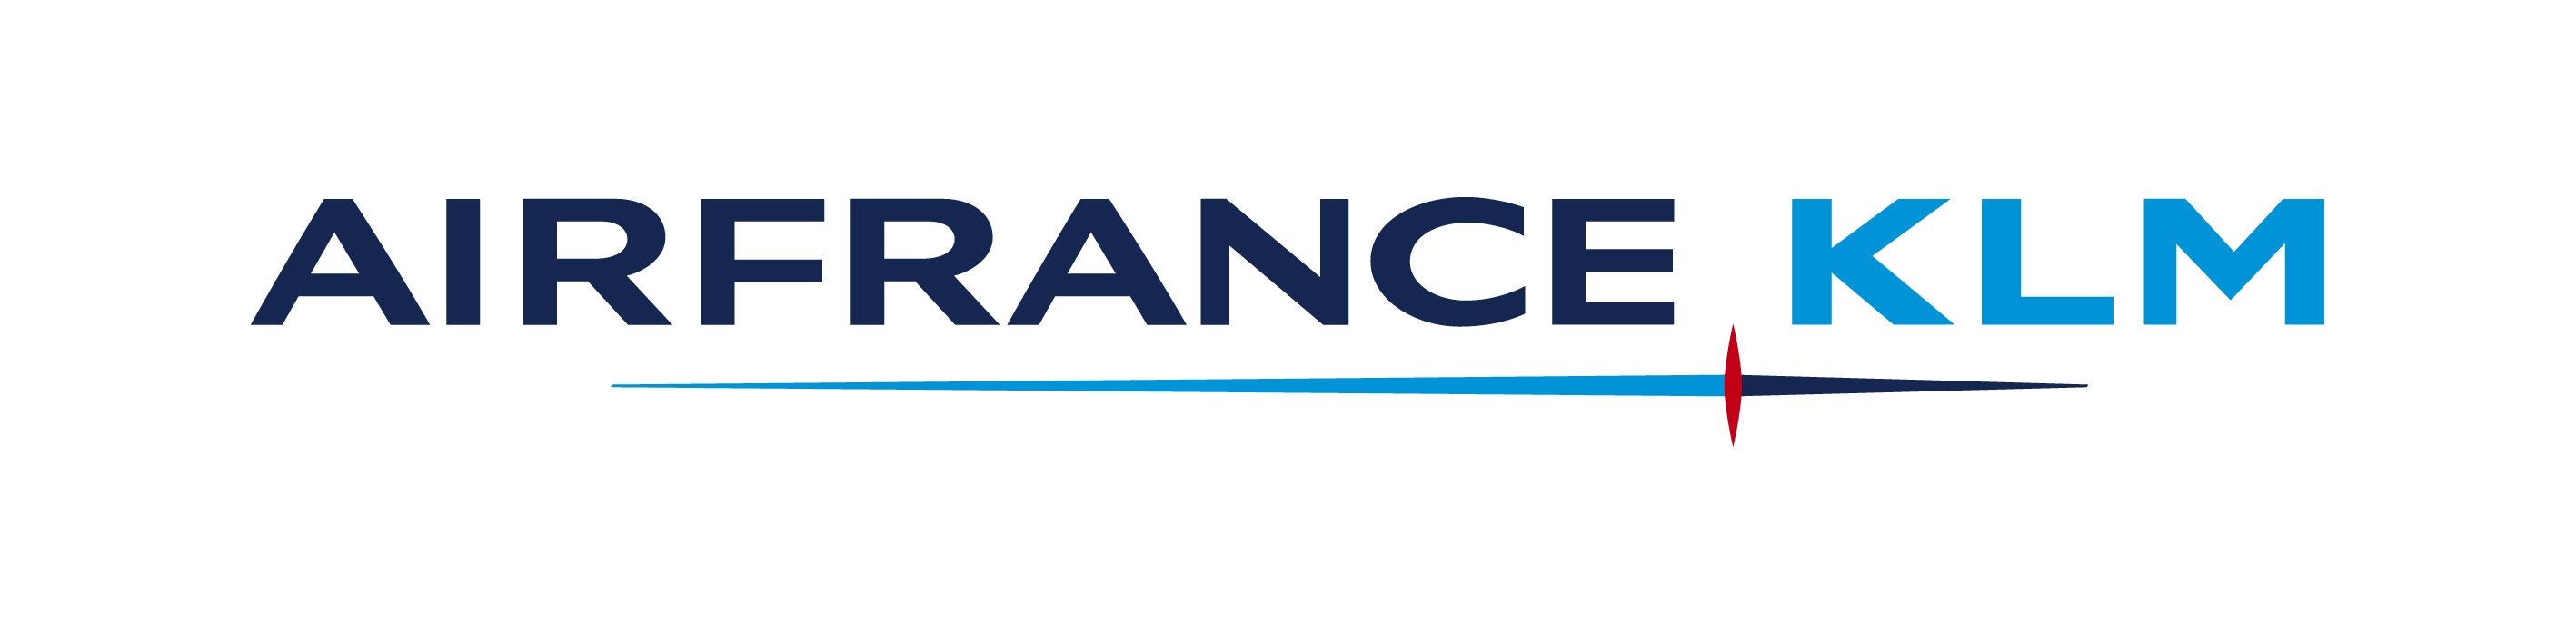 Air France KLM logos